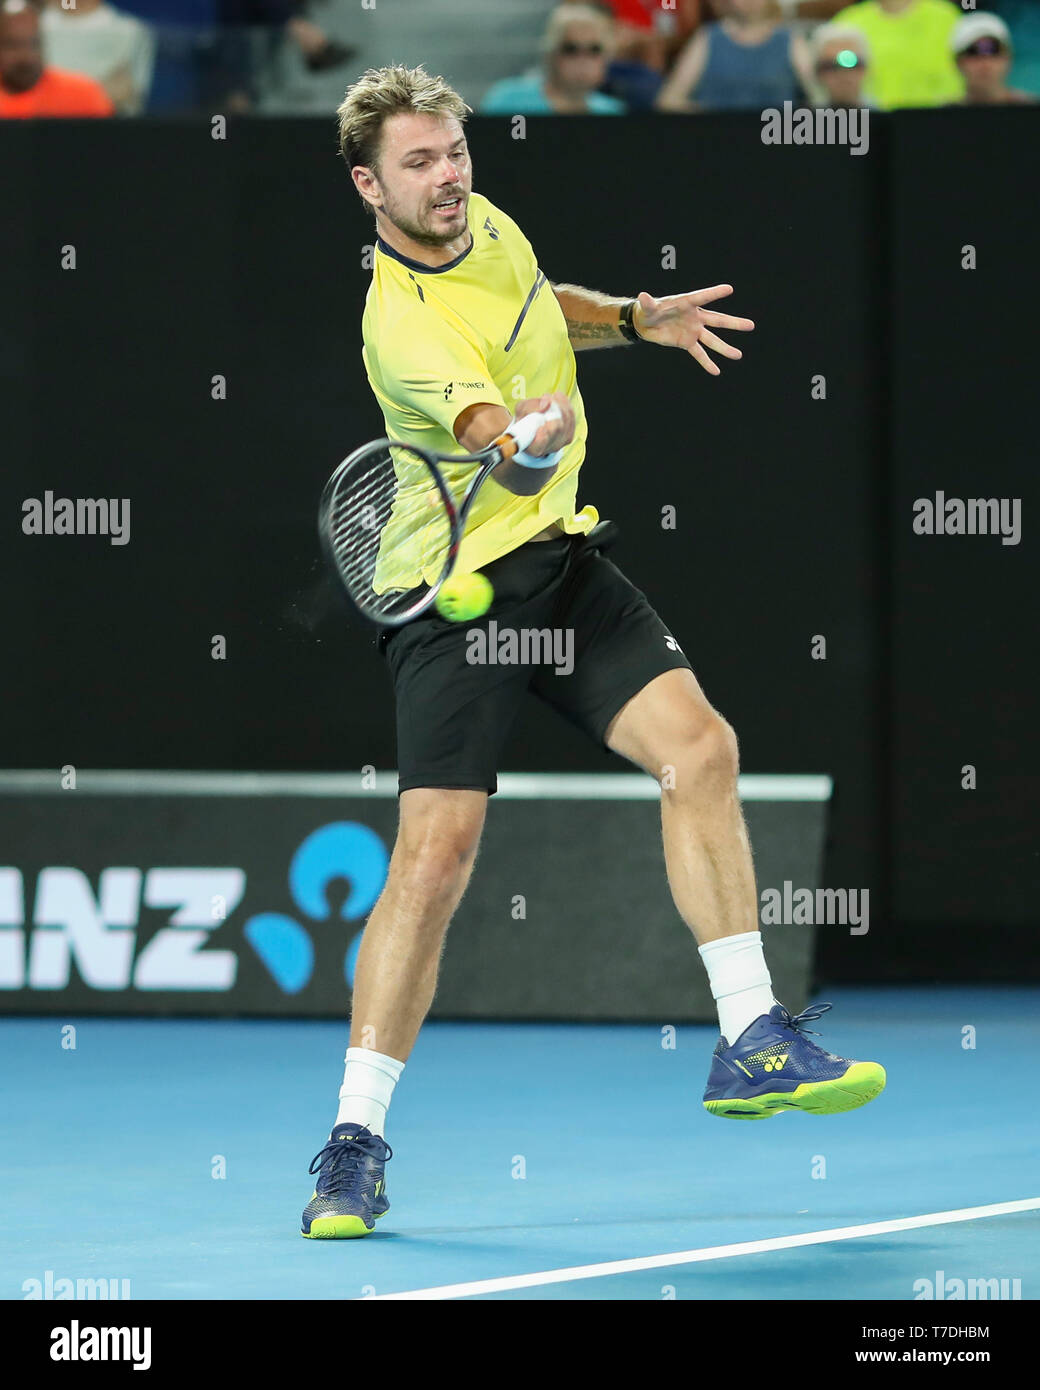 Swiss tennis player Stan Wawrinka playing forehand shot in Australian Open  2019 tennis tournament, Melbourne Park, Melbourne, Victoria, Australia  Stock Photo - Alamy